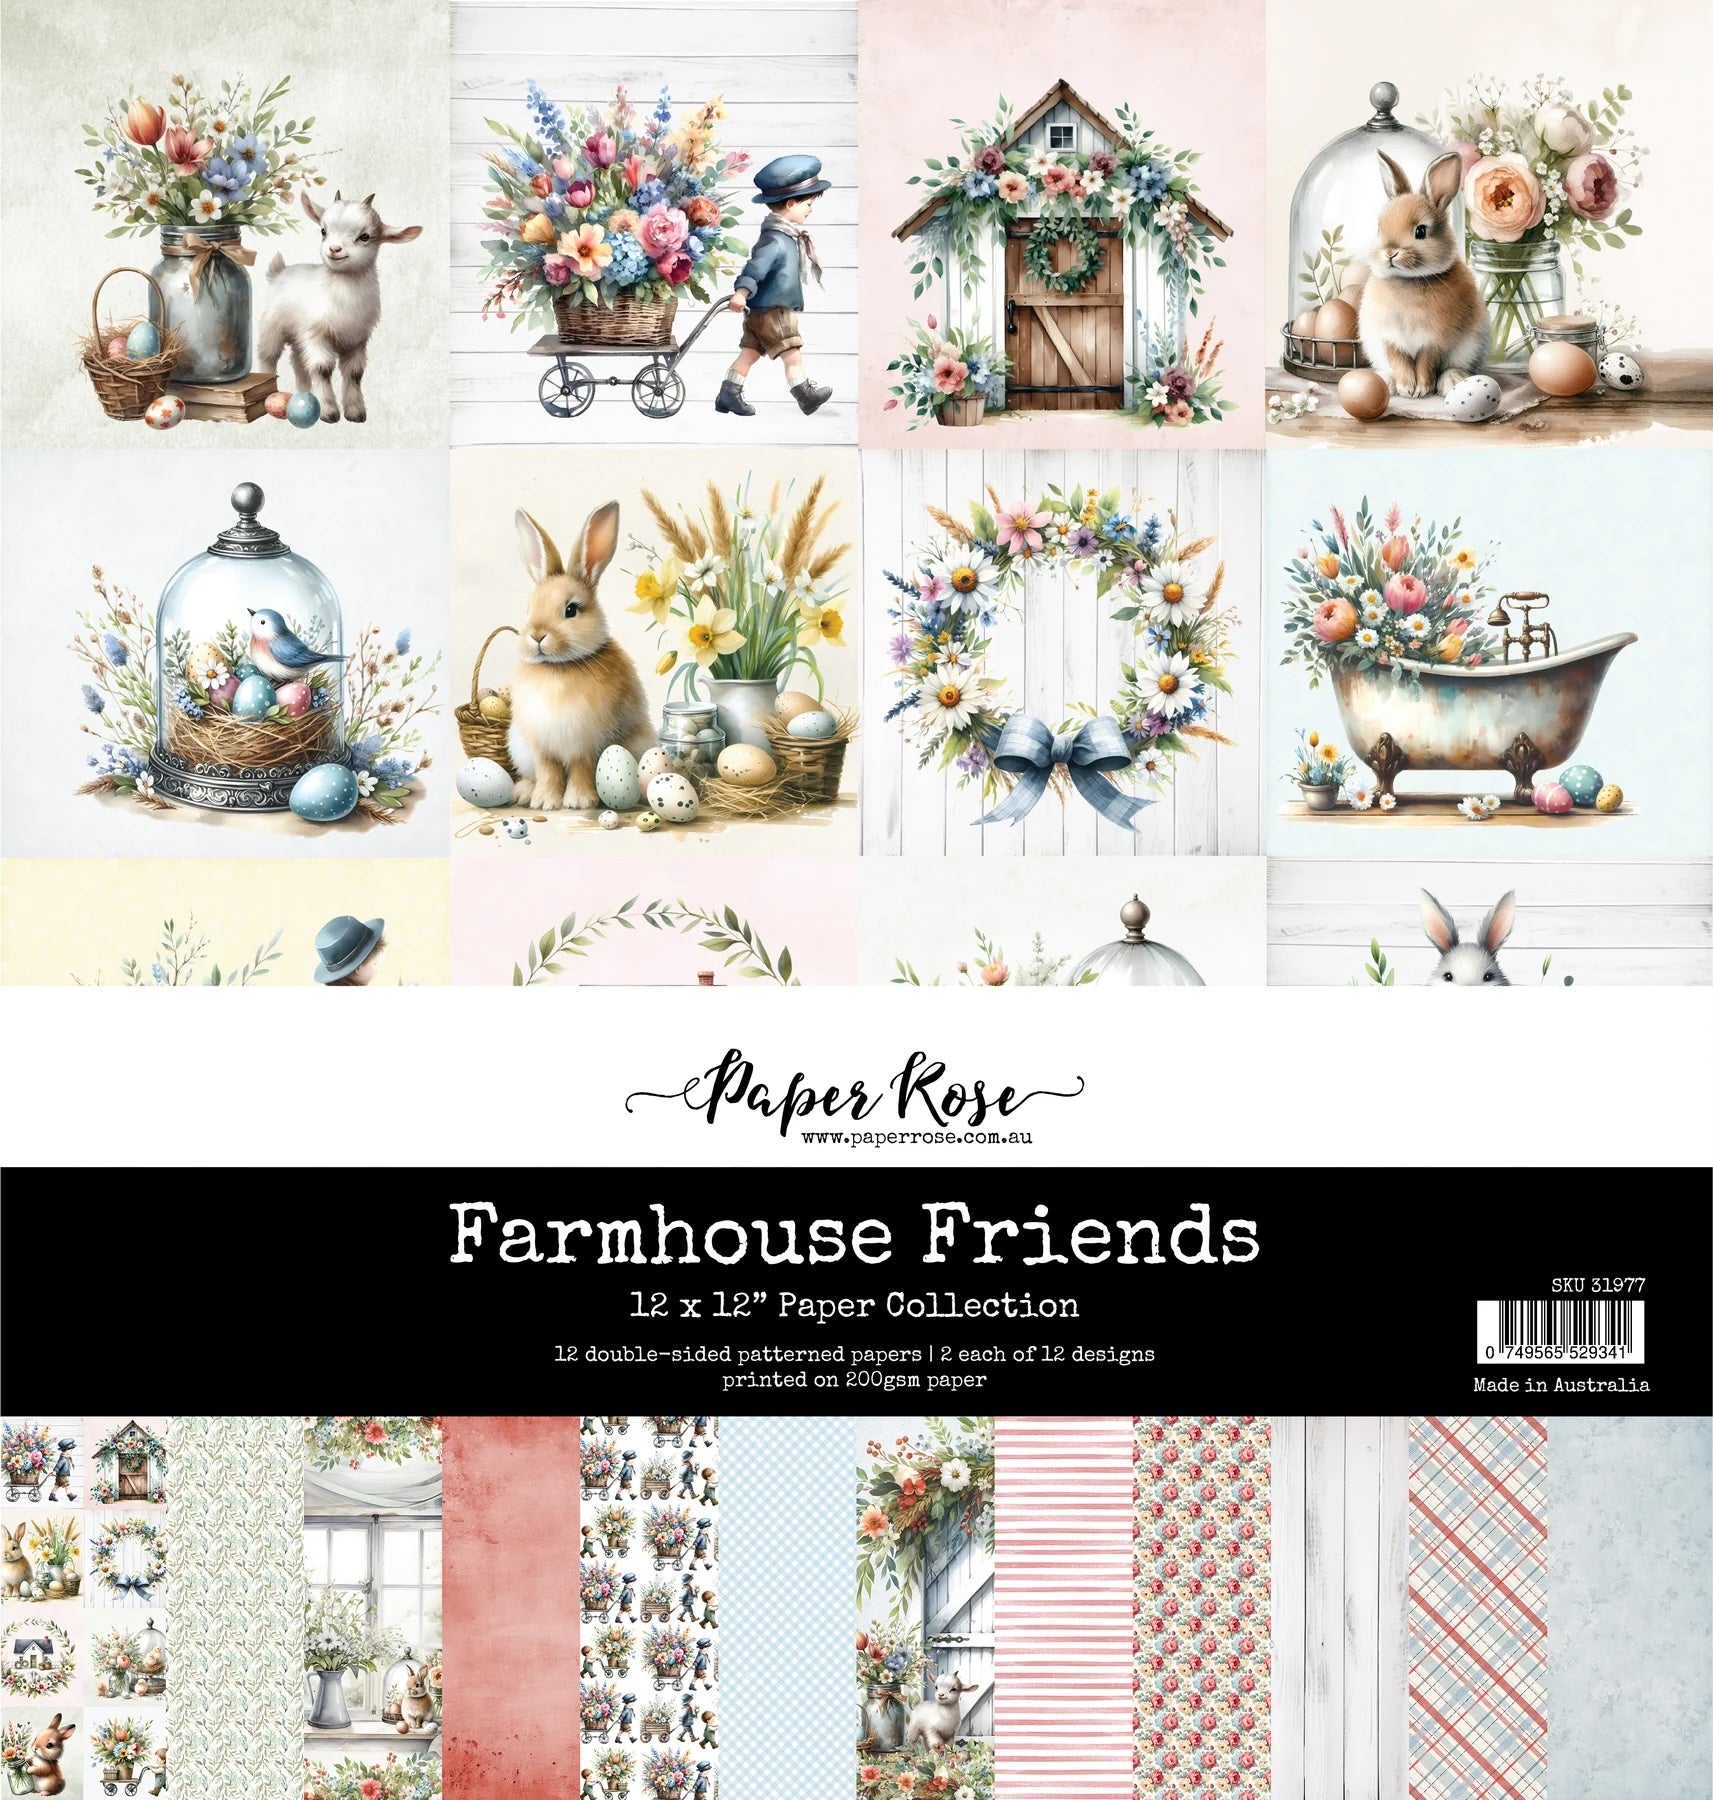 Farmhouse Friends 12x12 Paper Collection 31977